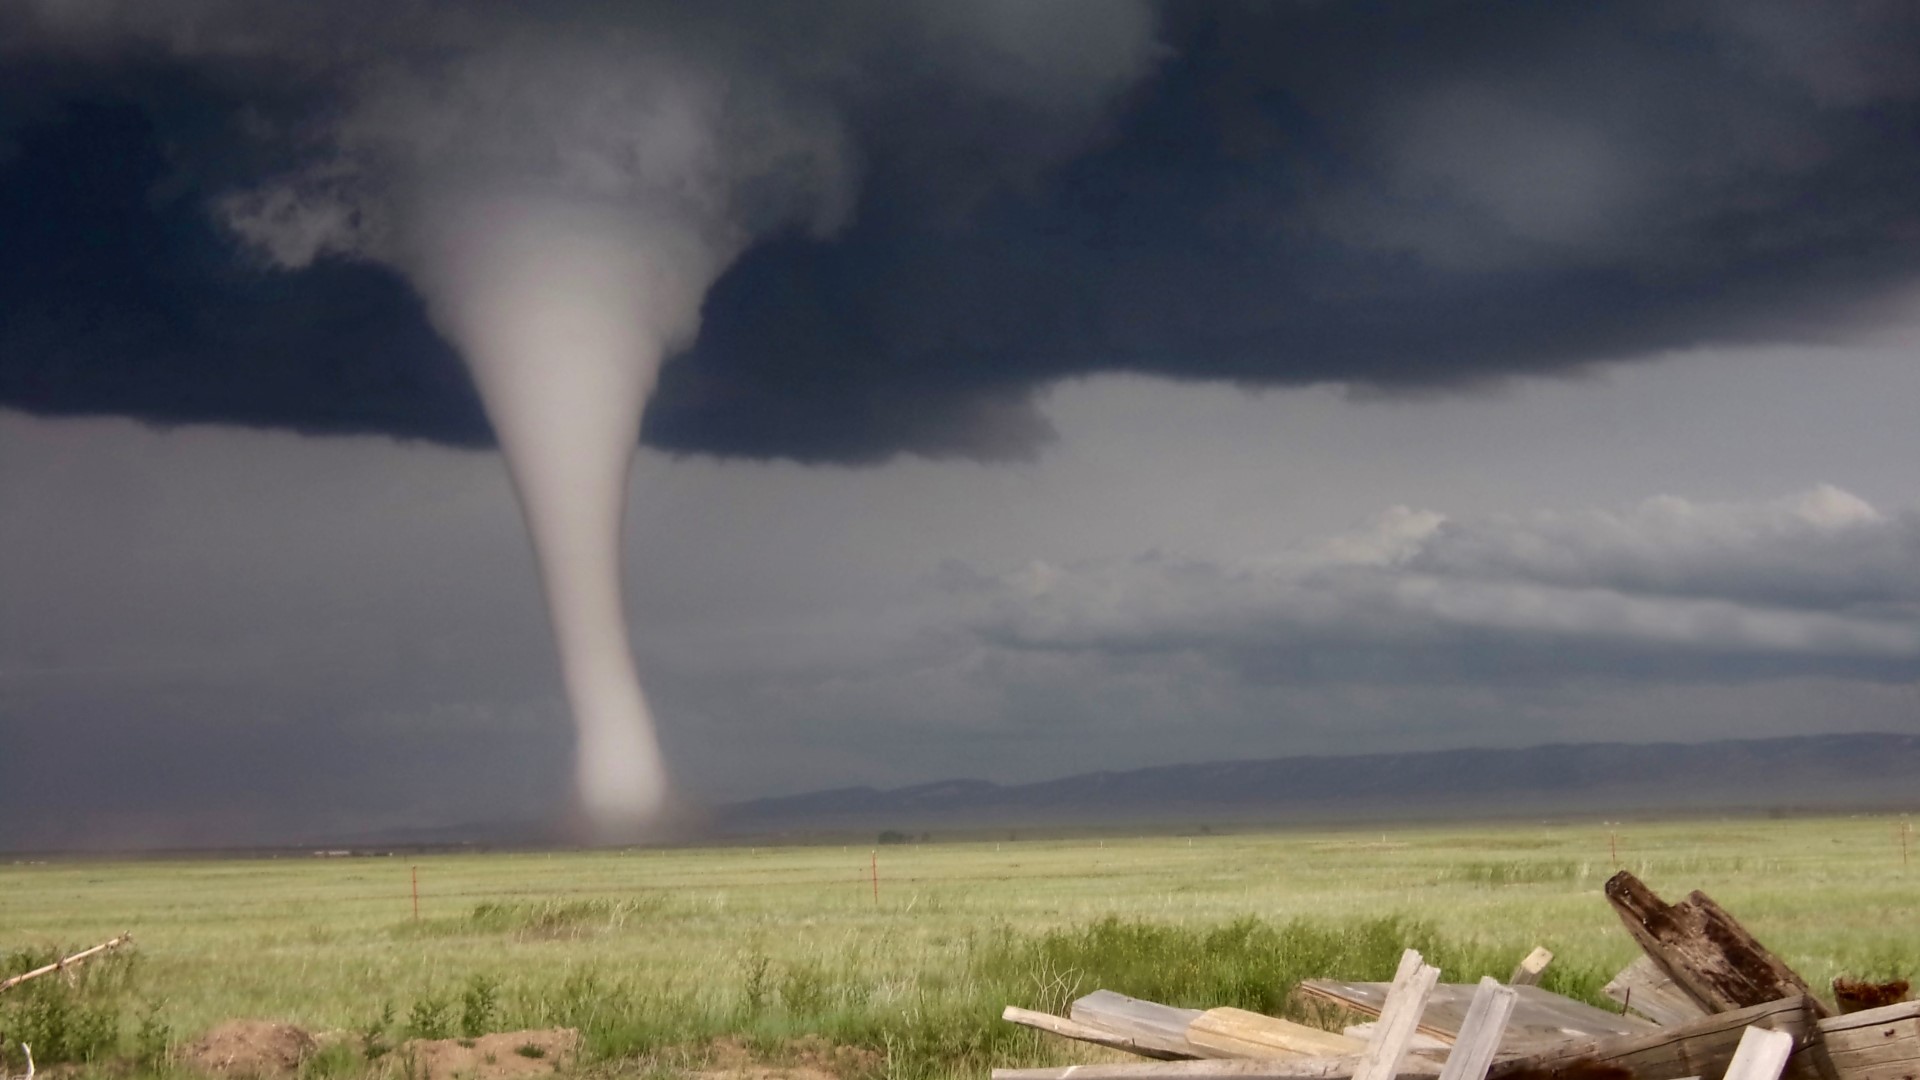 Views of tornado near Laramie, WY